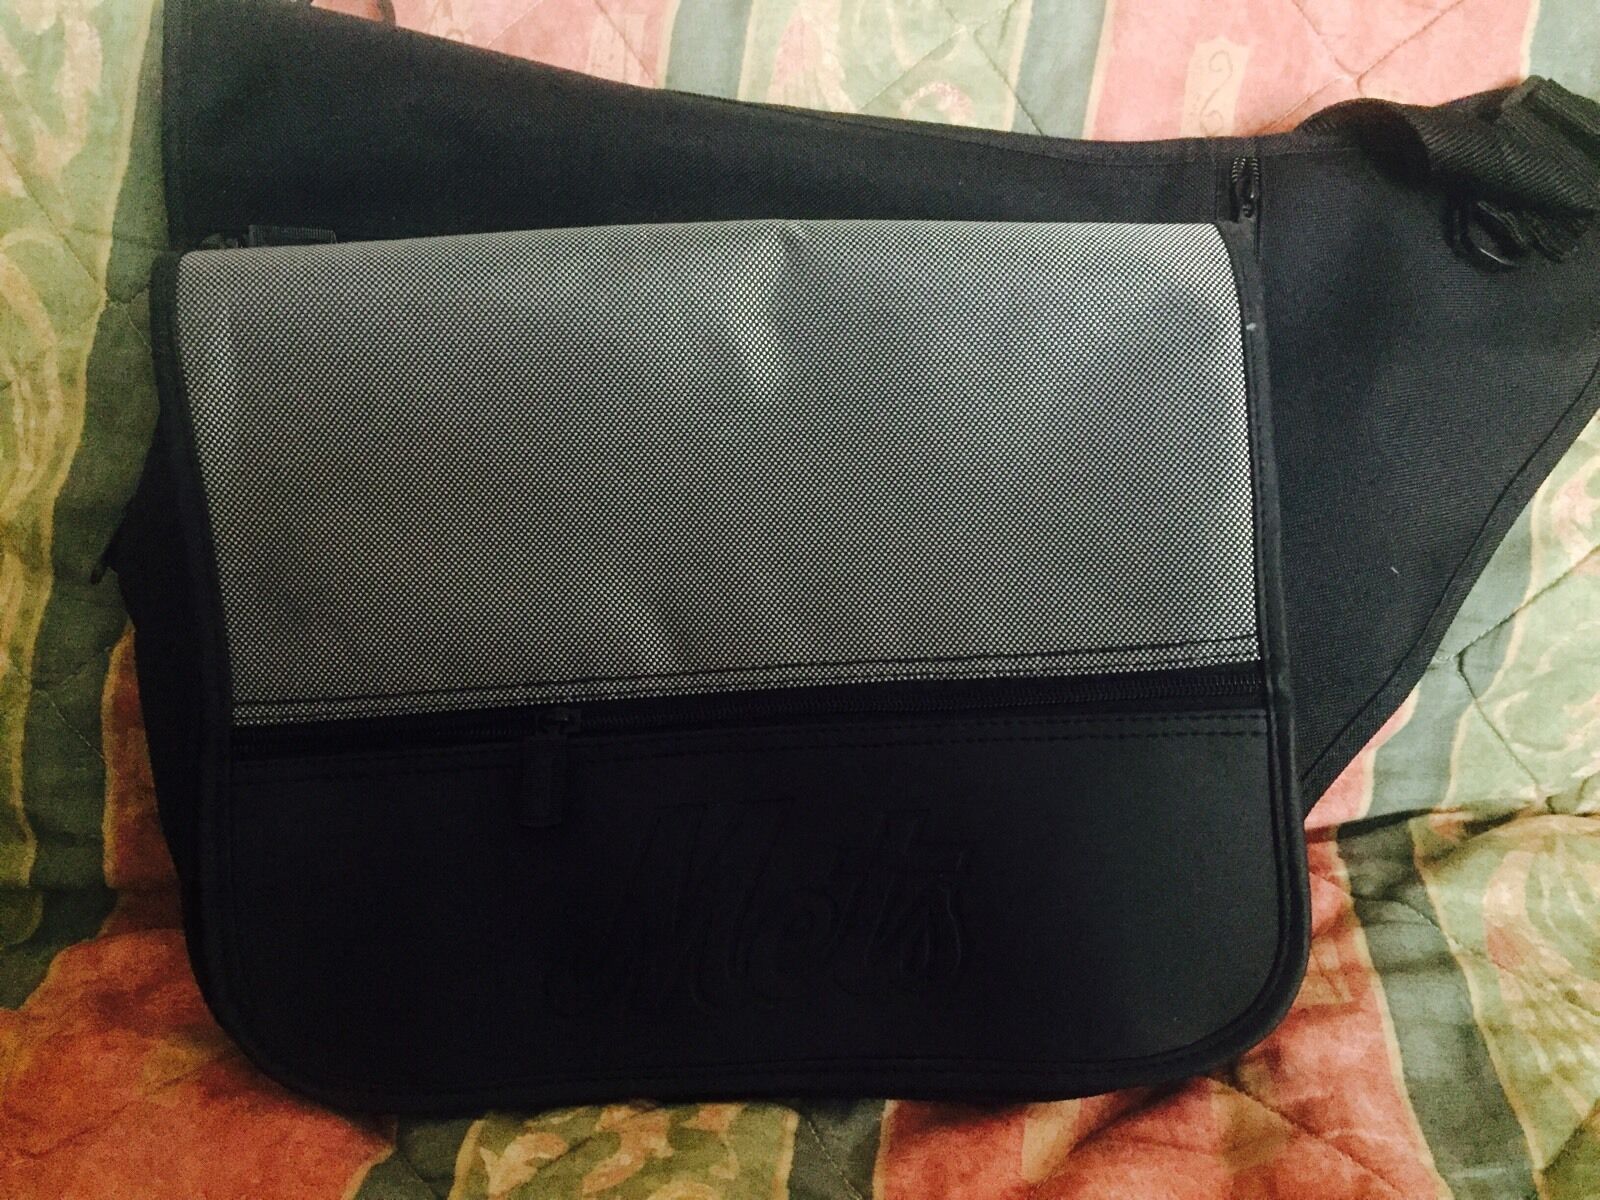 Mets Messenger Bag Organizer,Briefcase for Office,School,Travel/season Ticket Ho